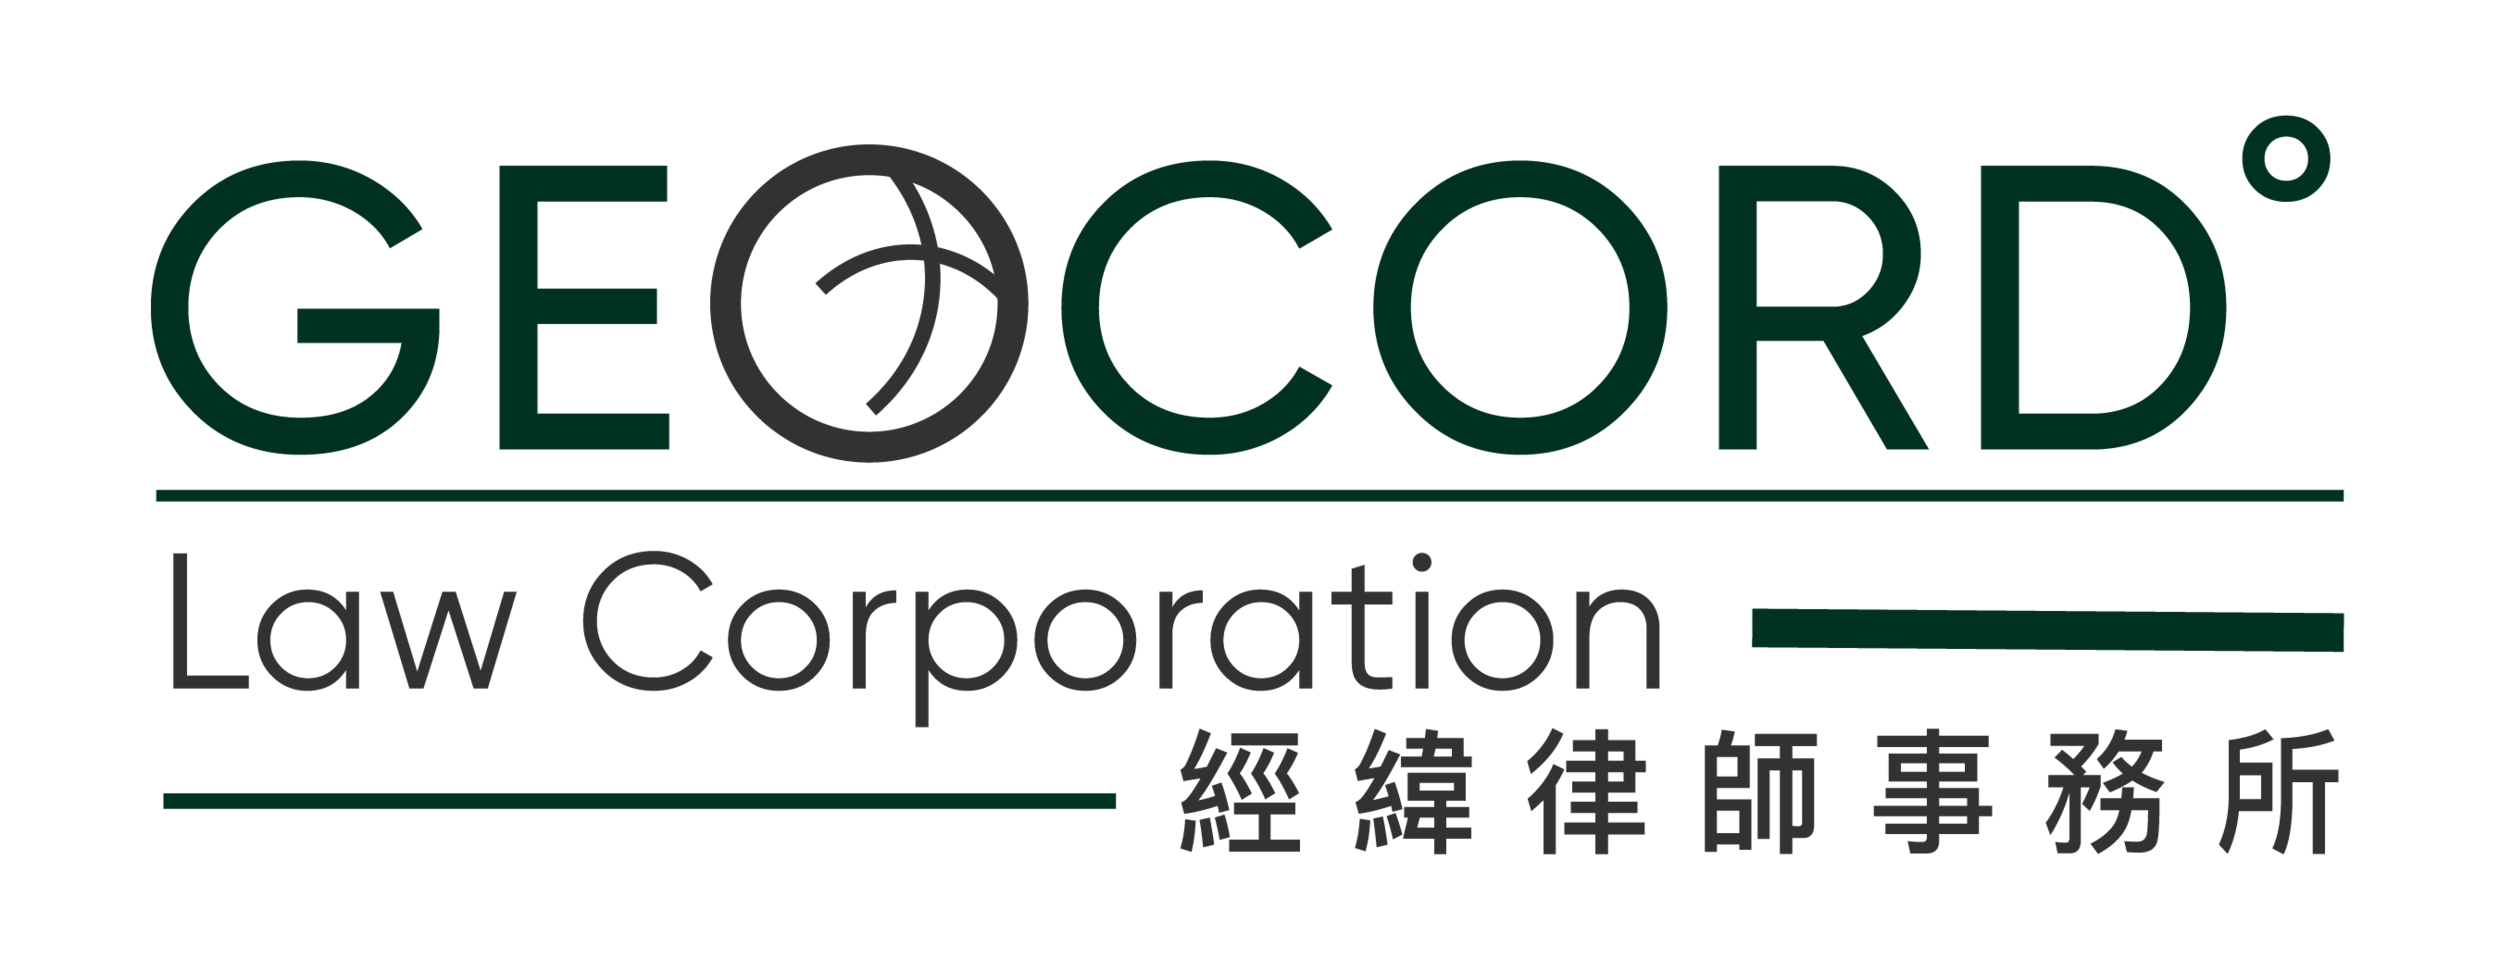 Geocord Law Corporation